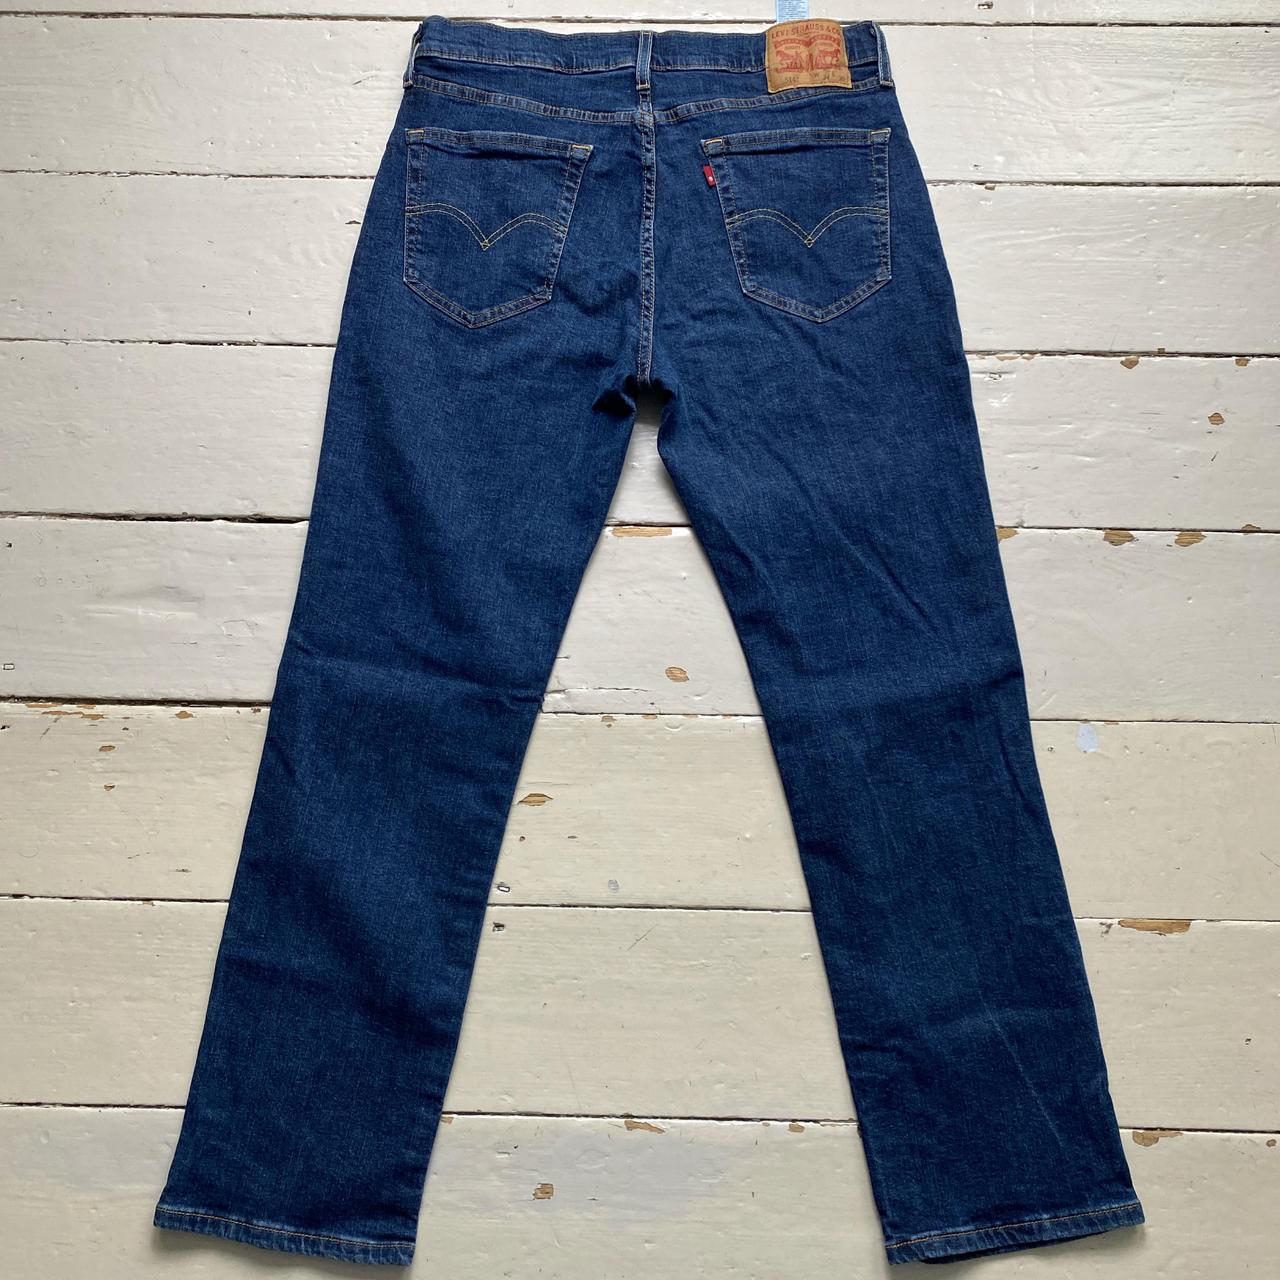 Levis 514 Navy Baggy Jeans